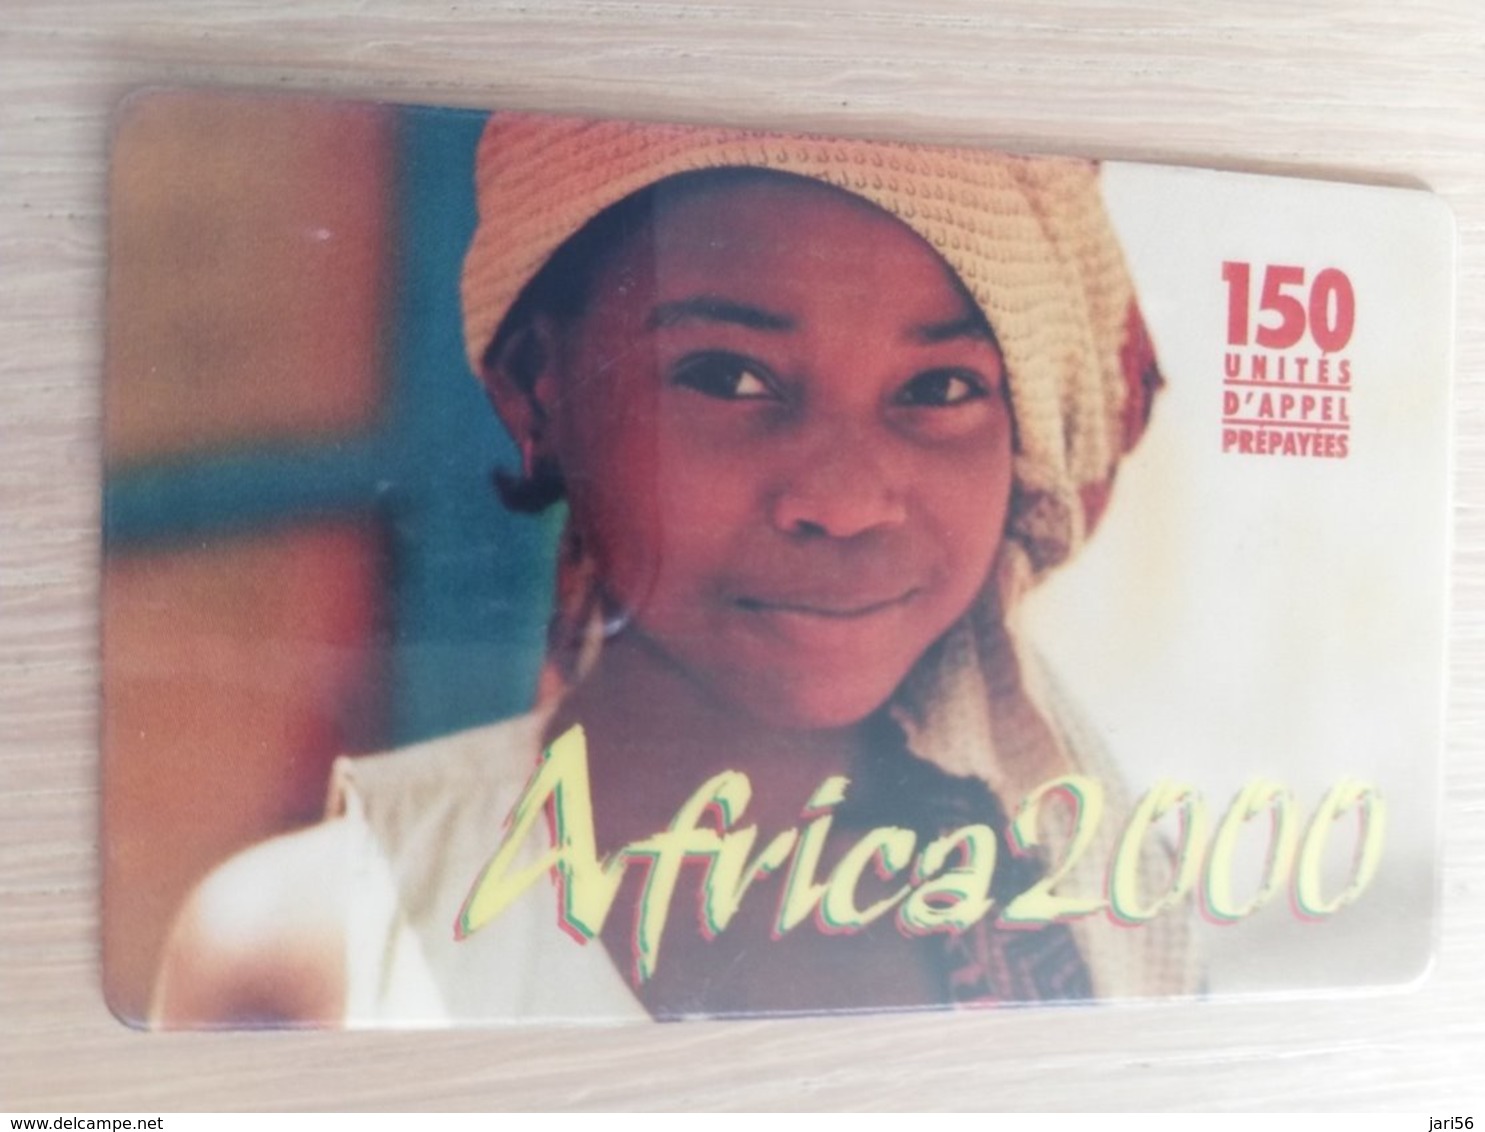 FRANCE/FRANKRIJK  AFRICA 2000 150 UNITS PREPAID       ** 1520** - Nachladekarten (Handy/SIM)